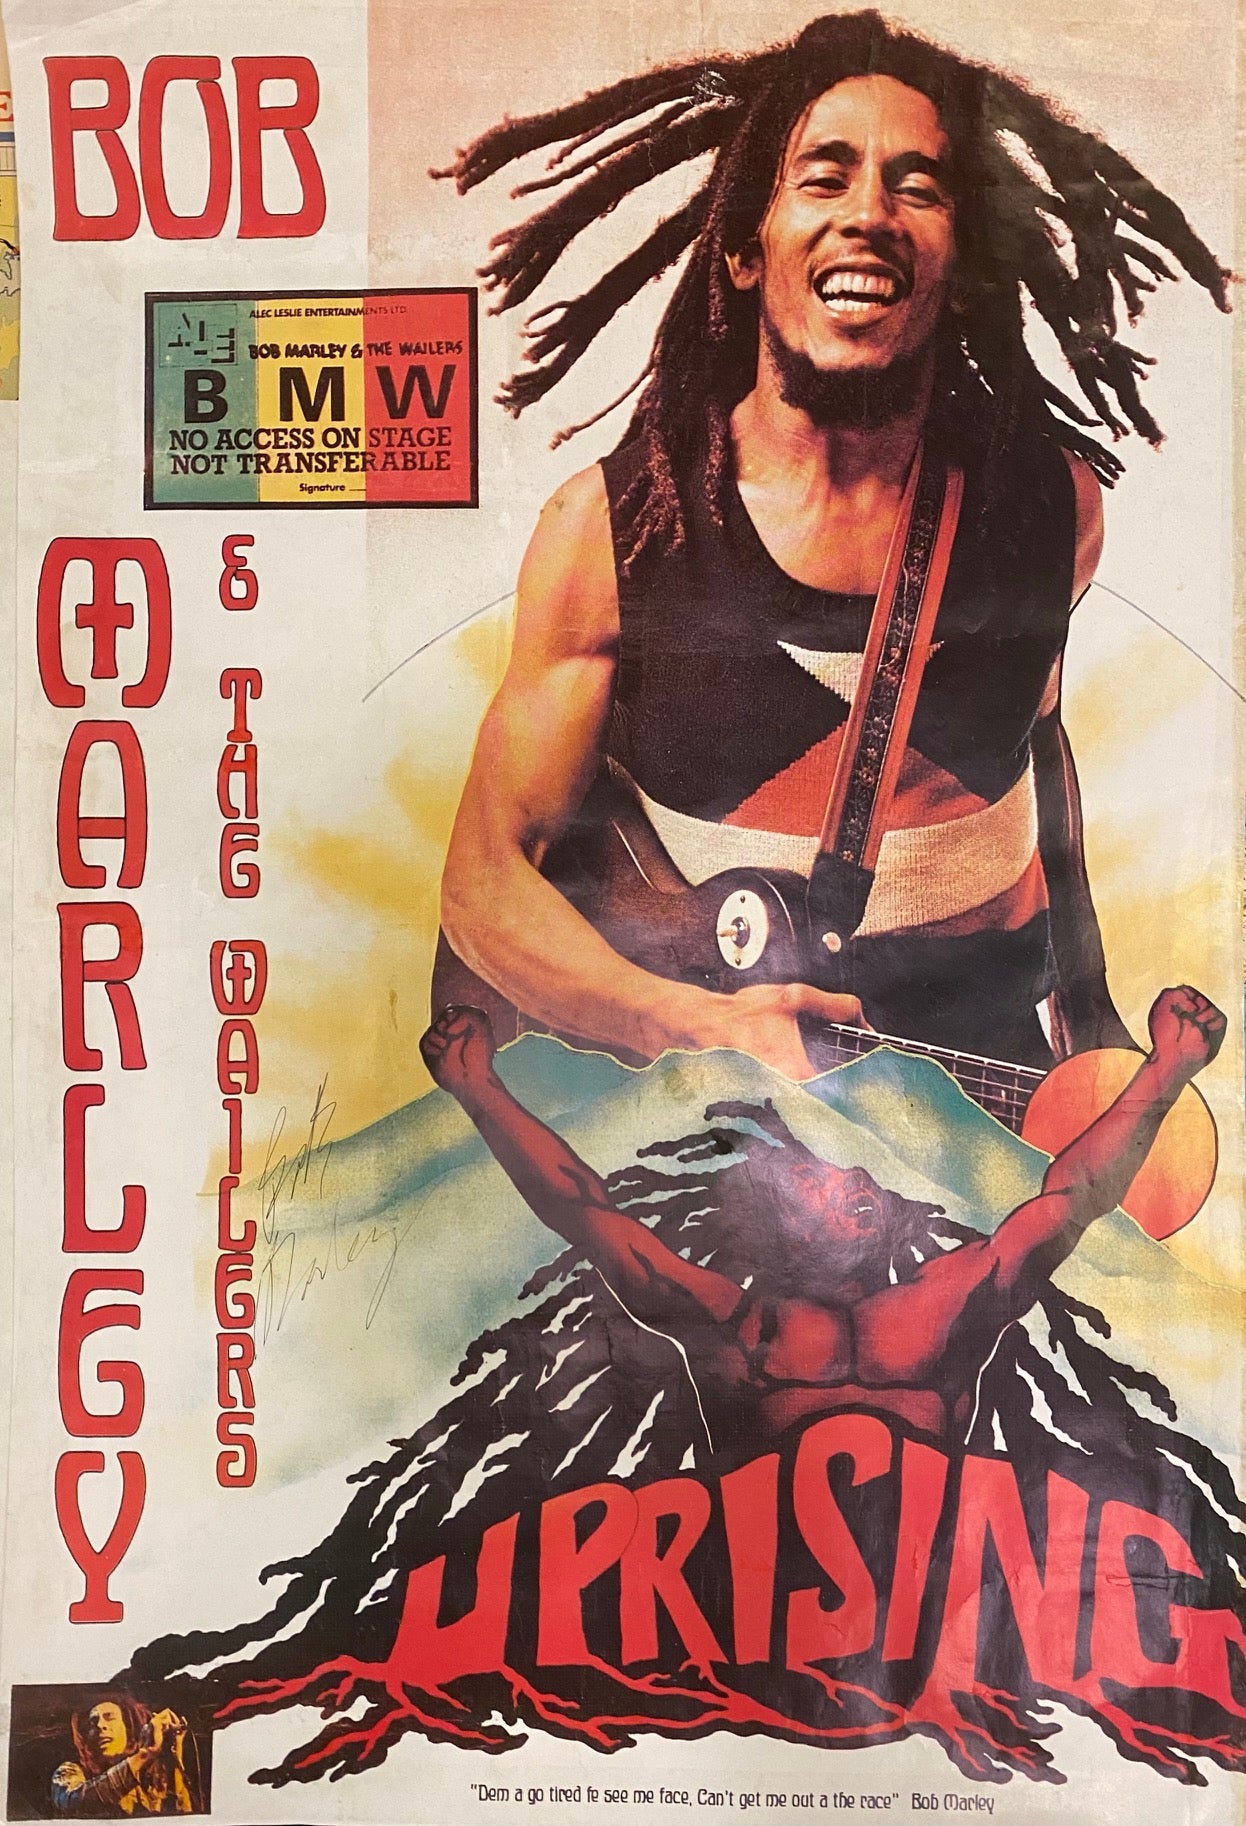 Bob Marley Lyrics Gifts & Merchandise for Sale